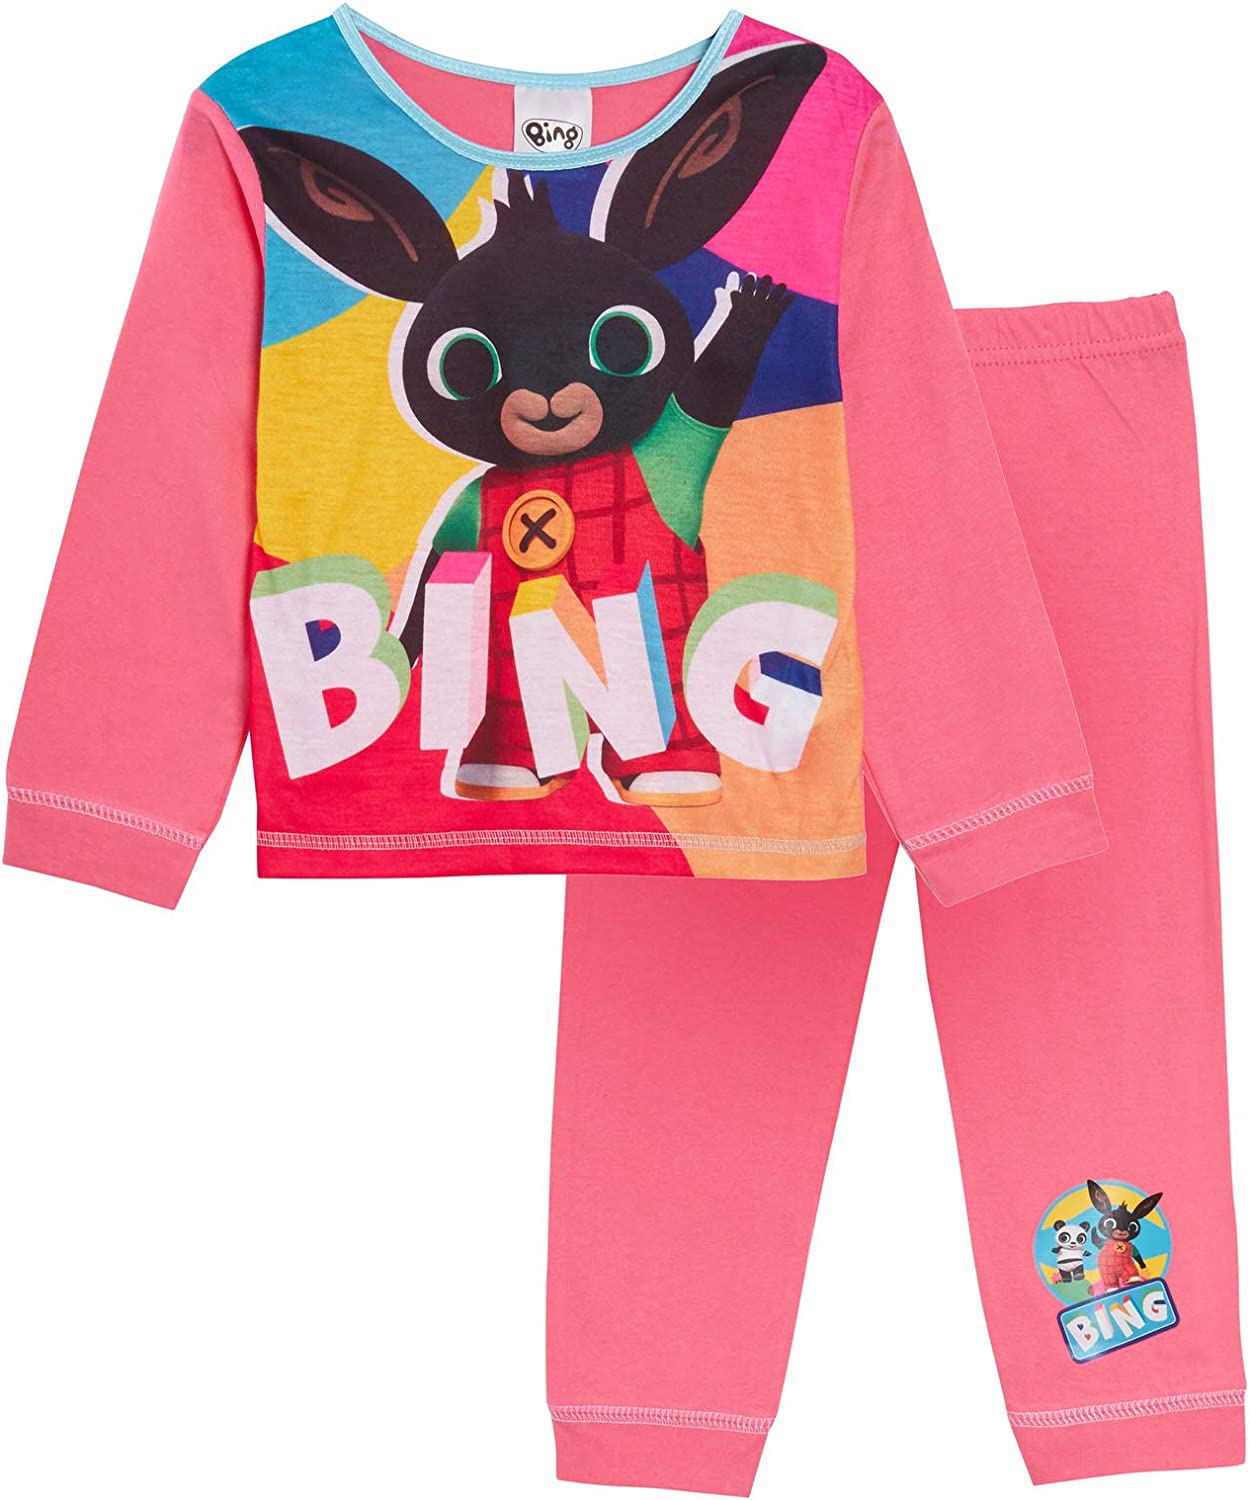 Bing Girls Long Sleeve Nightwear Pjs Pyjama Set